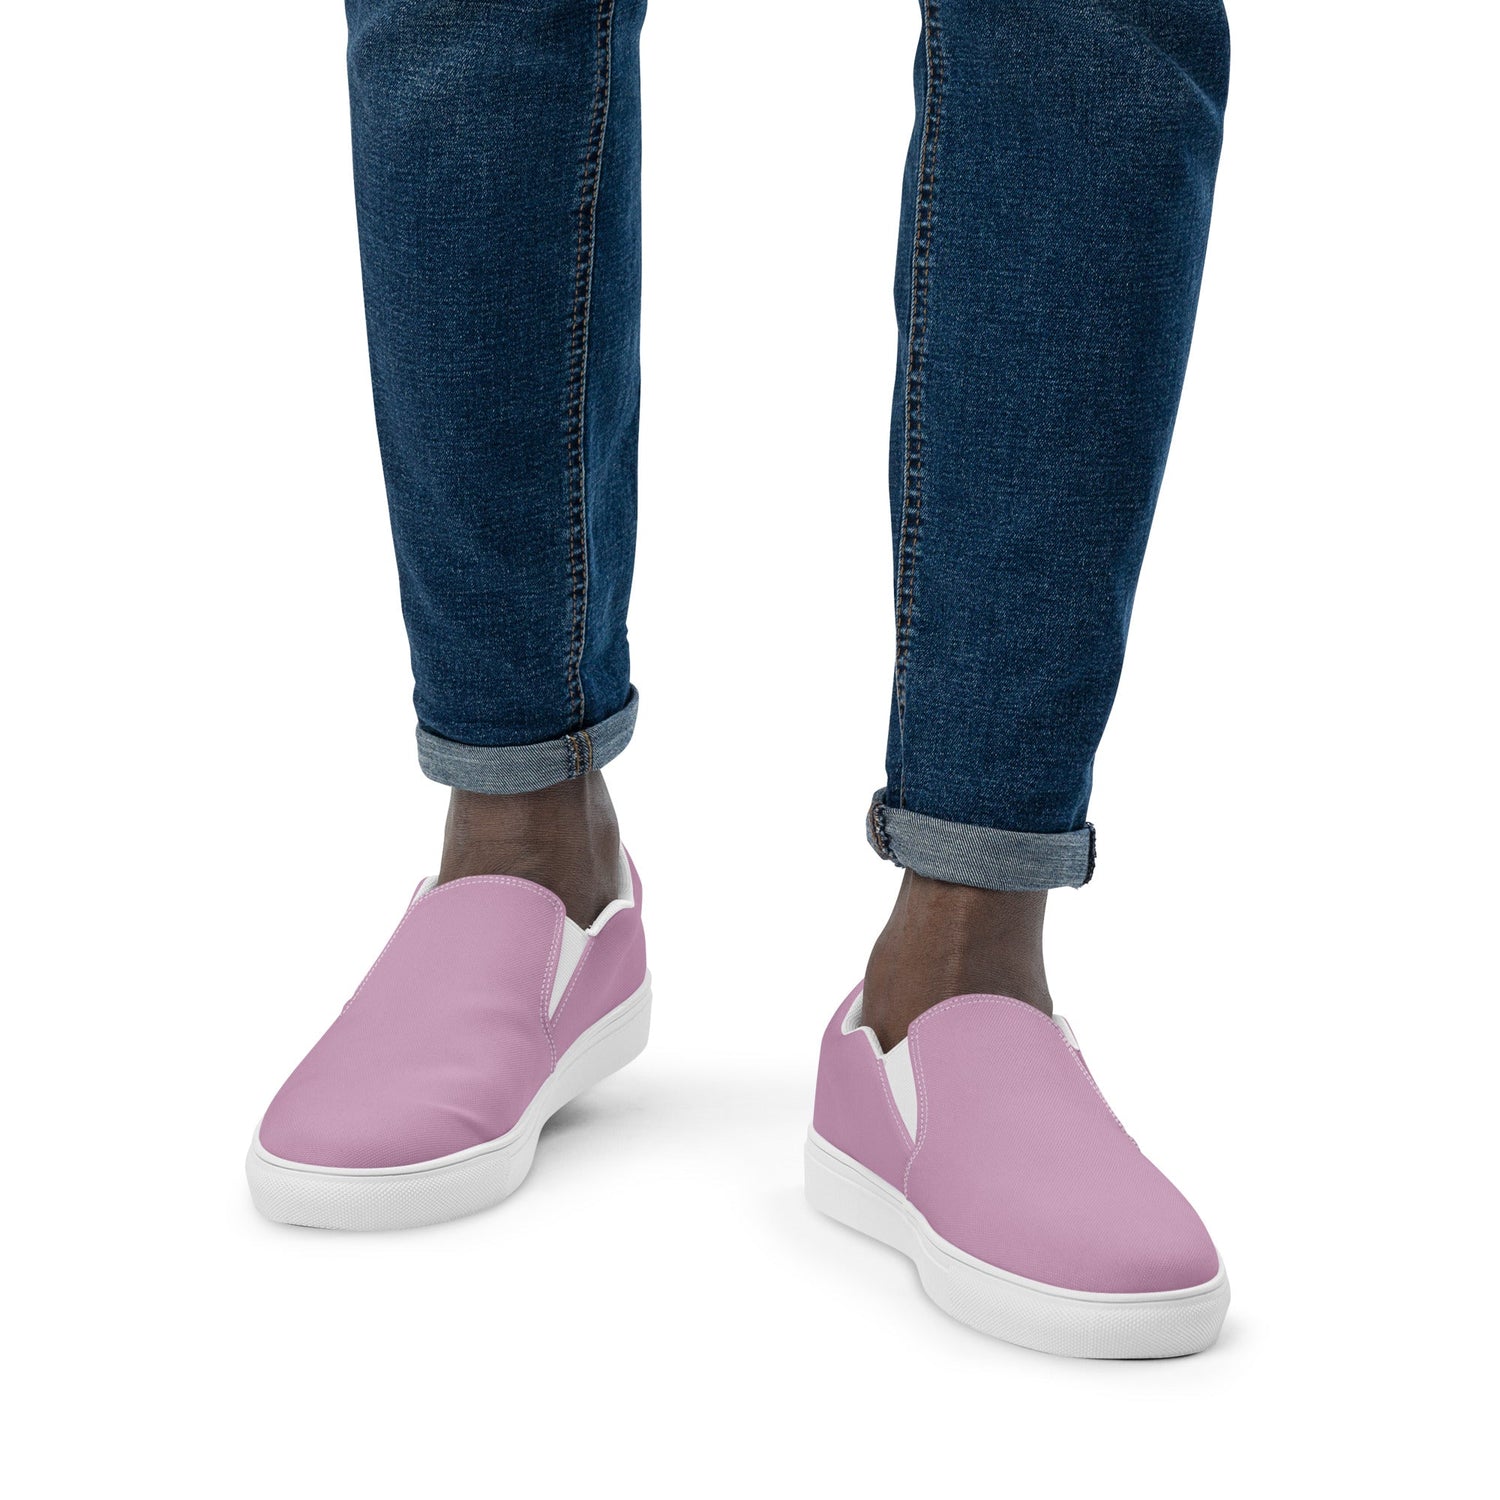 klasneakers Men’s slip-on canvas shoes - Faded Bubblegum